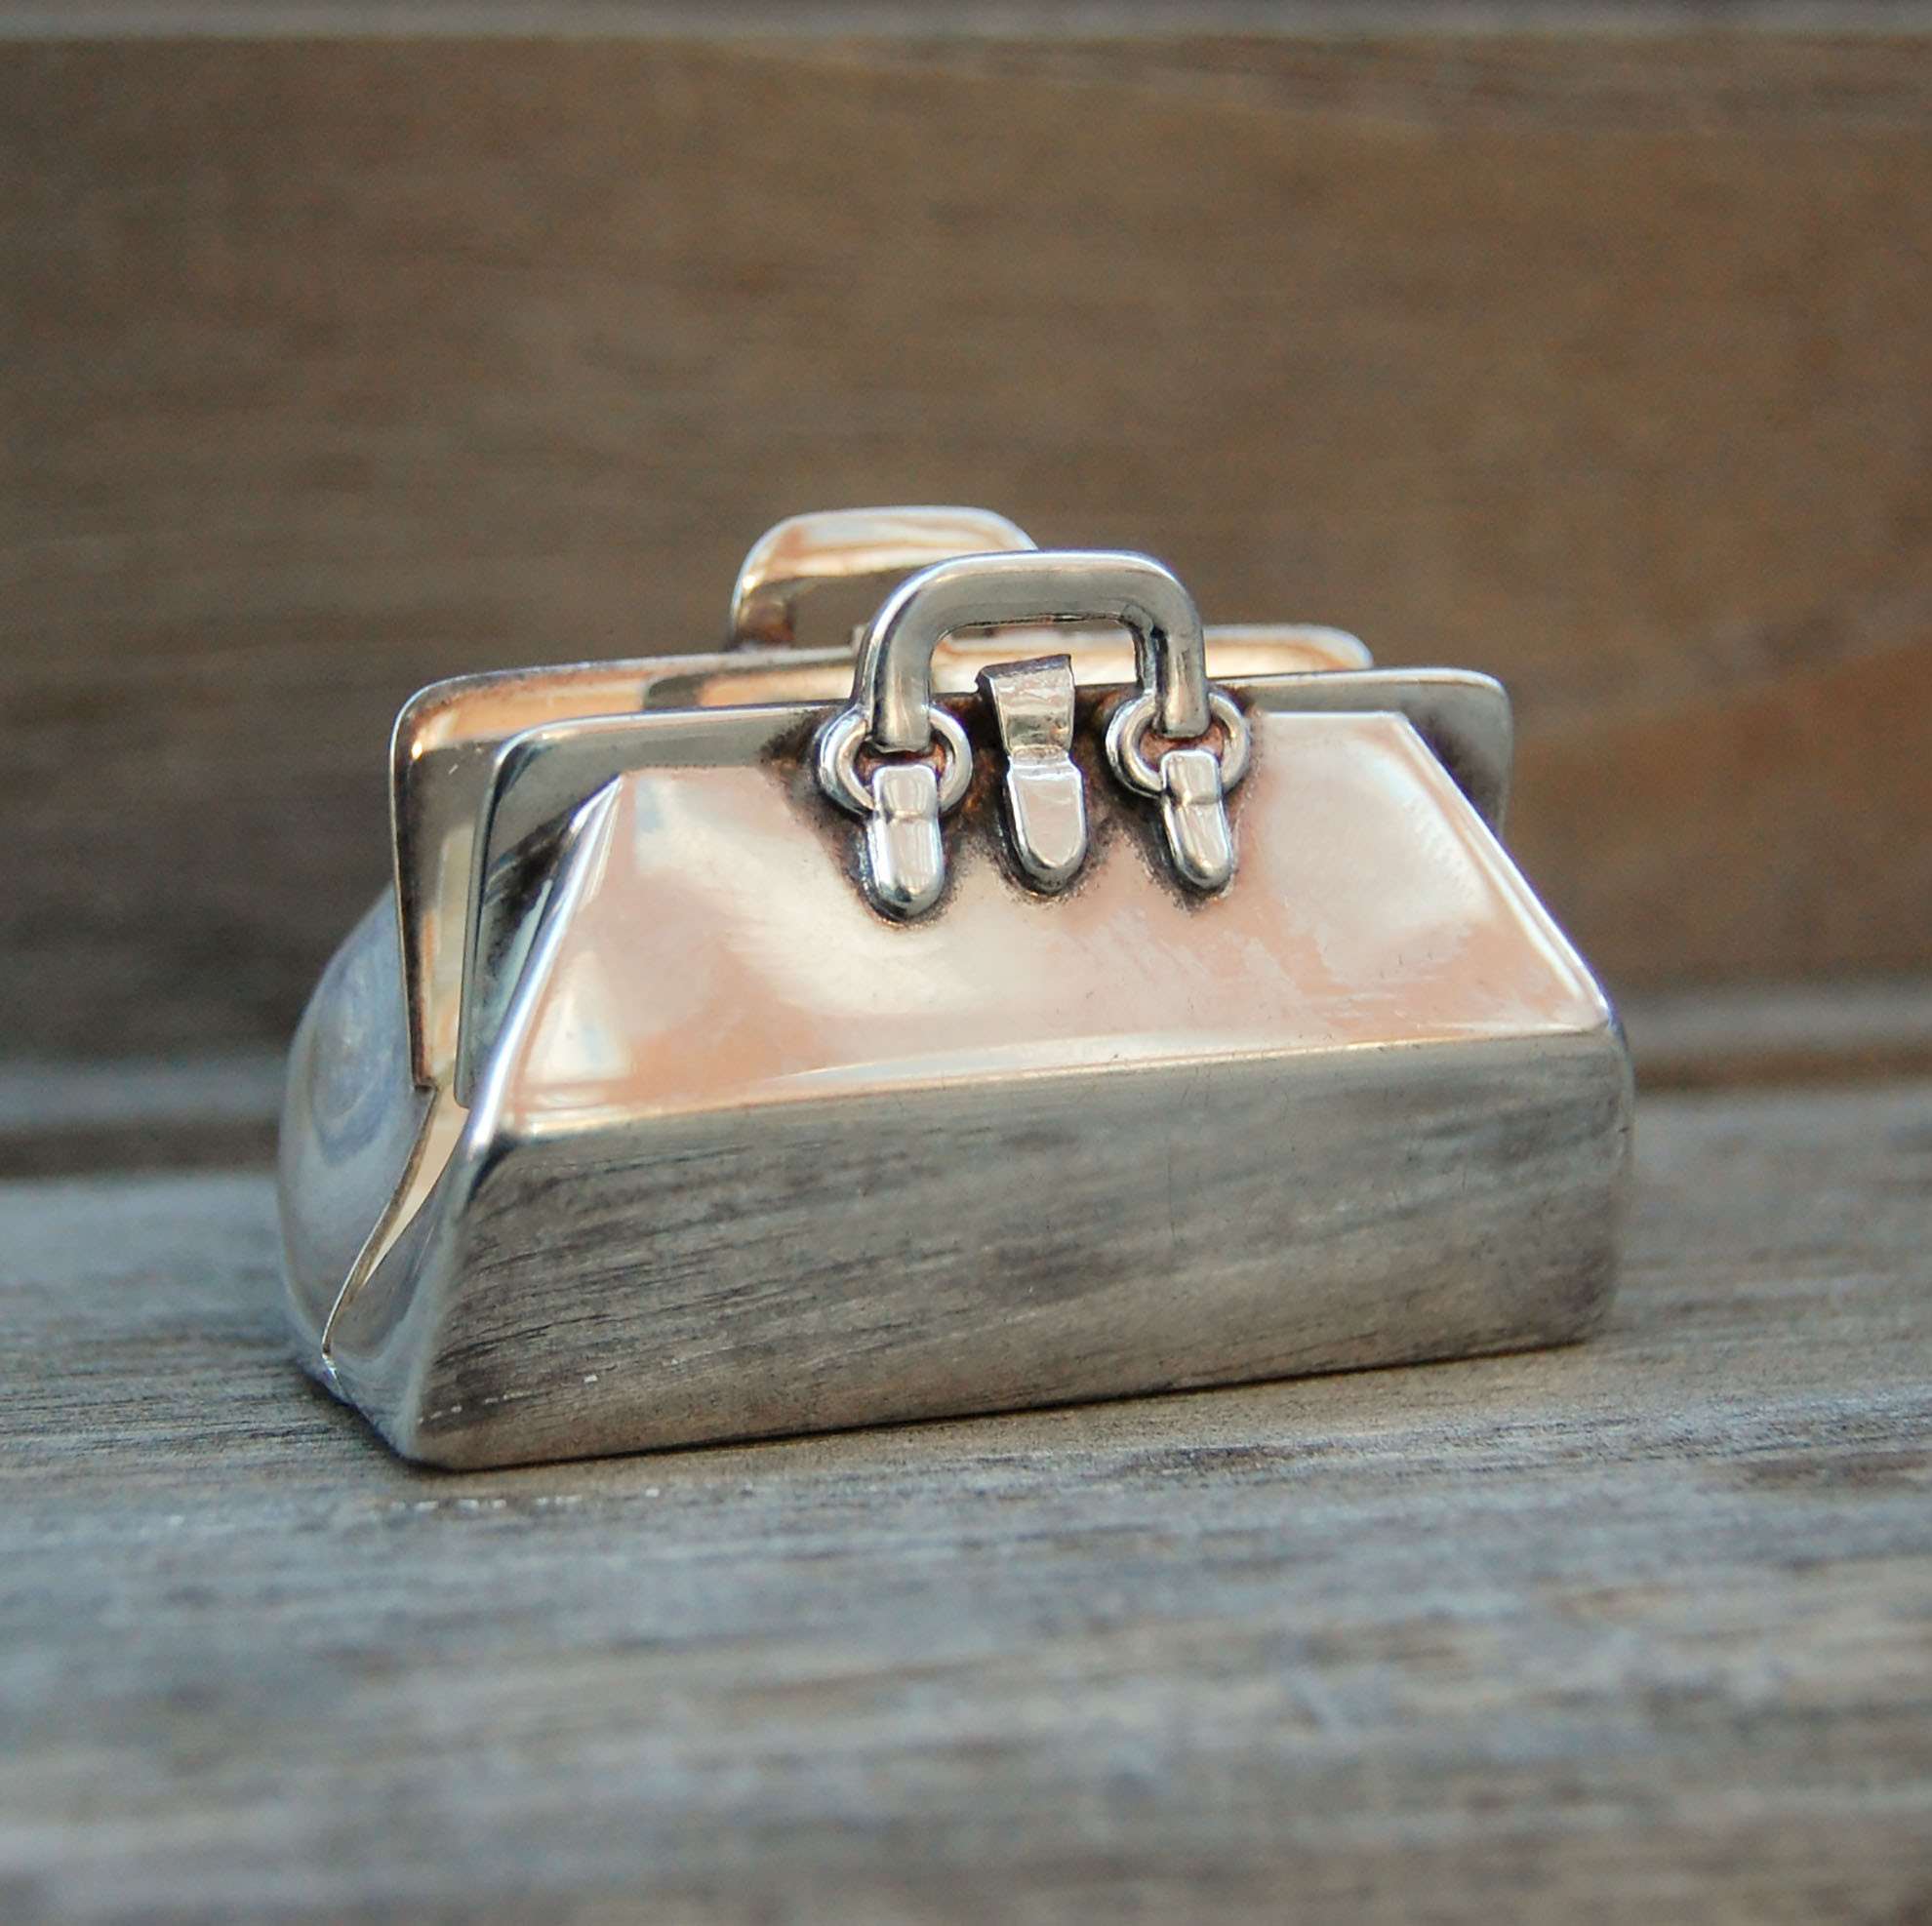 Tiffany & Co Silver Gift Box Pill Box Case Ribbon Bow Signature Pouch